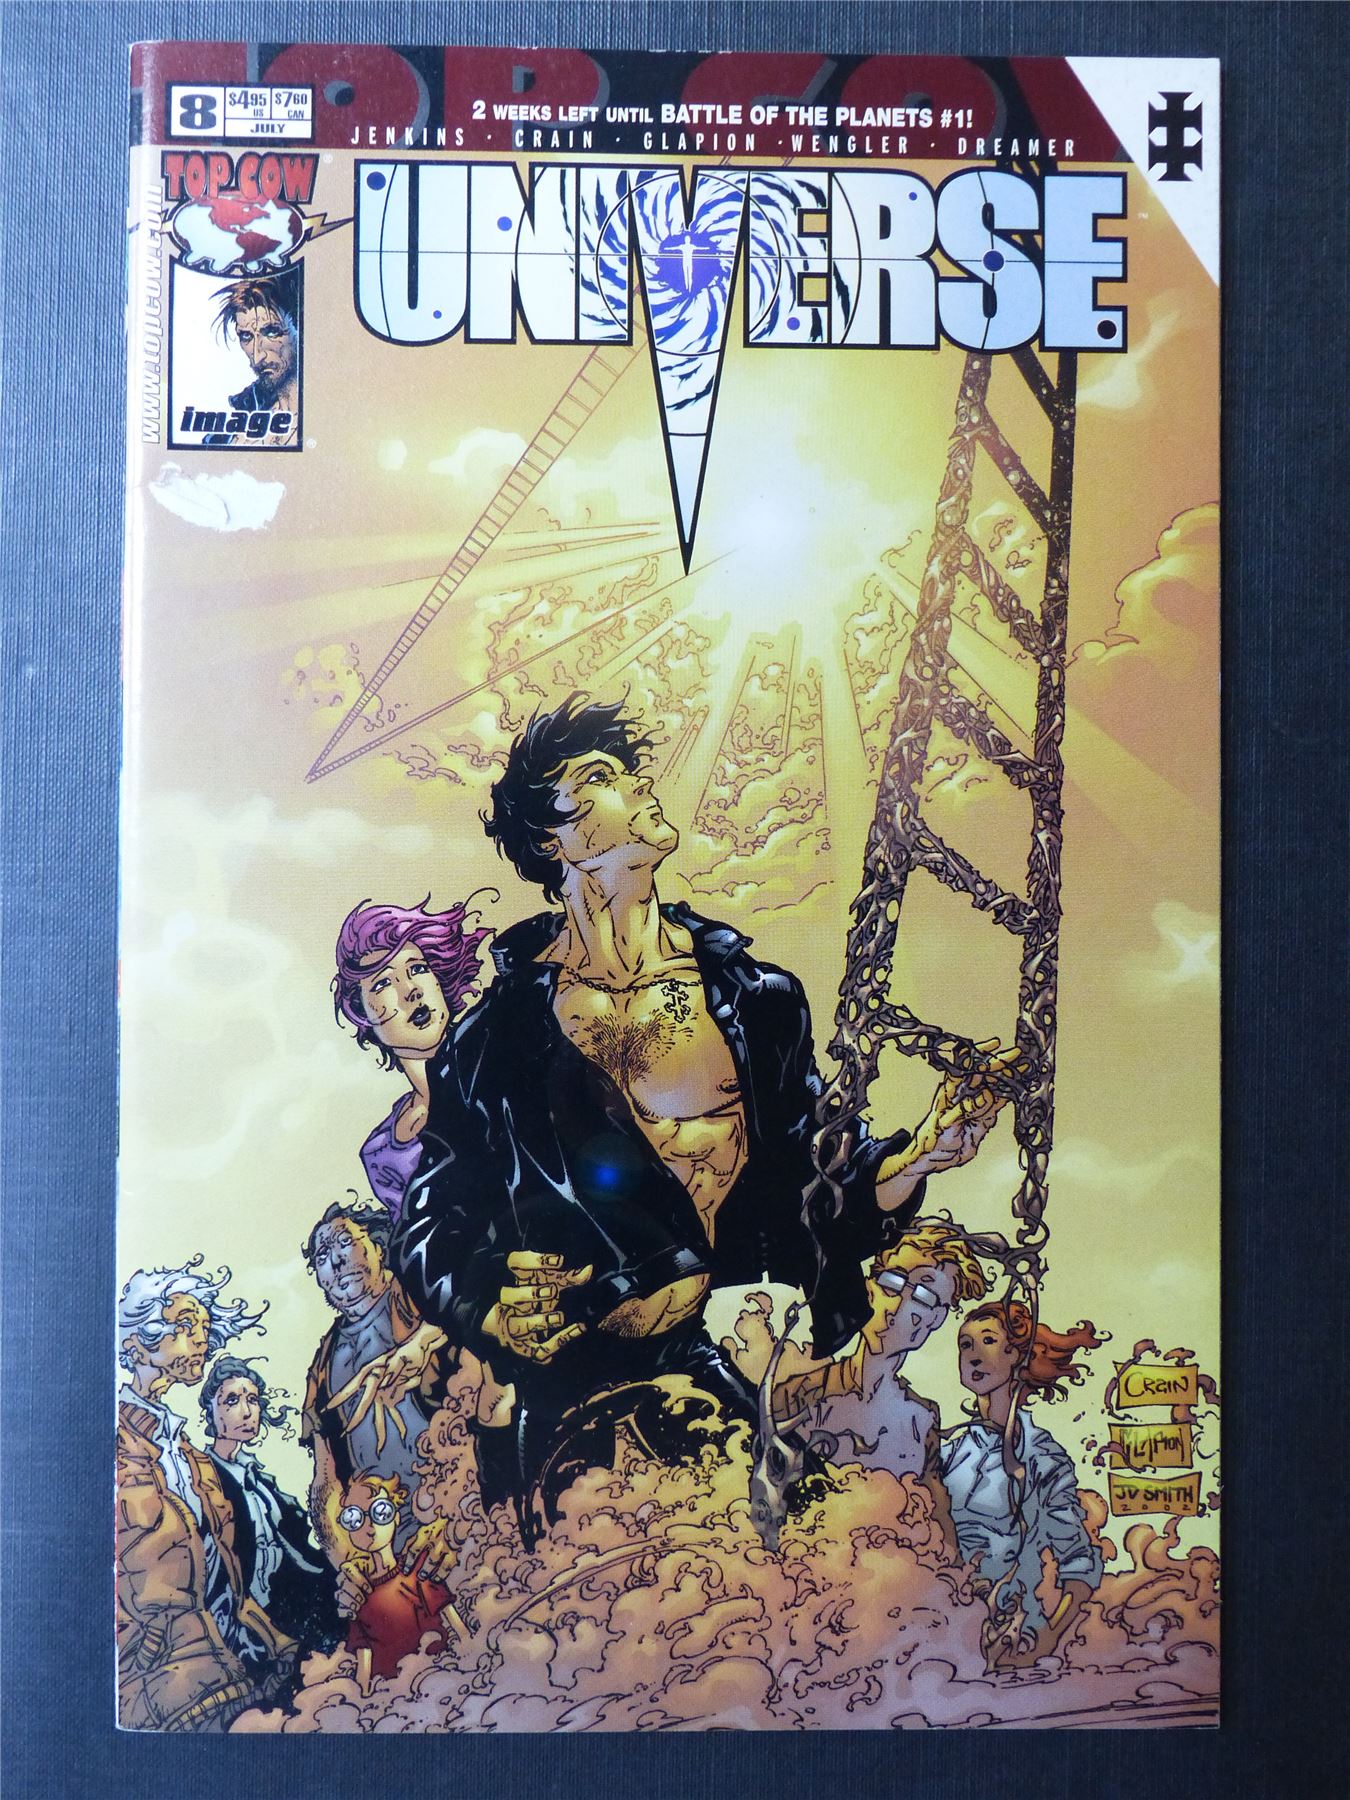 UNIVERSE #8 - Image Comics #21K